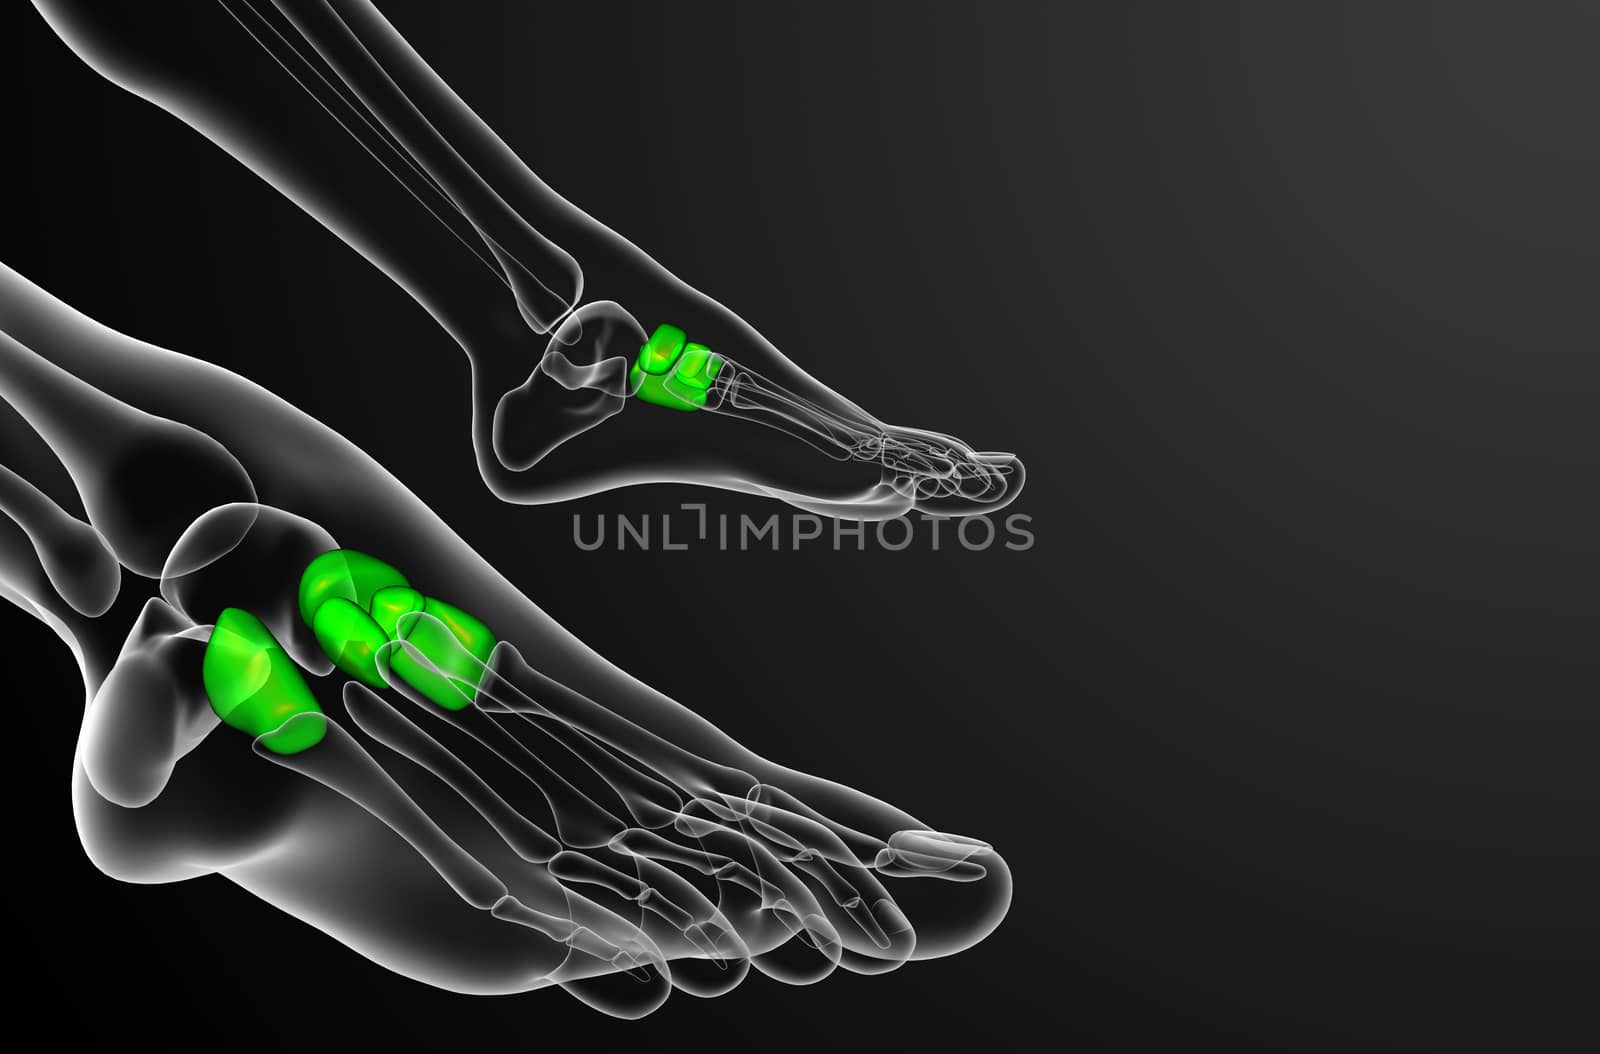 3d render medical illustration of the midfoot bone - side view